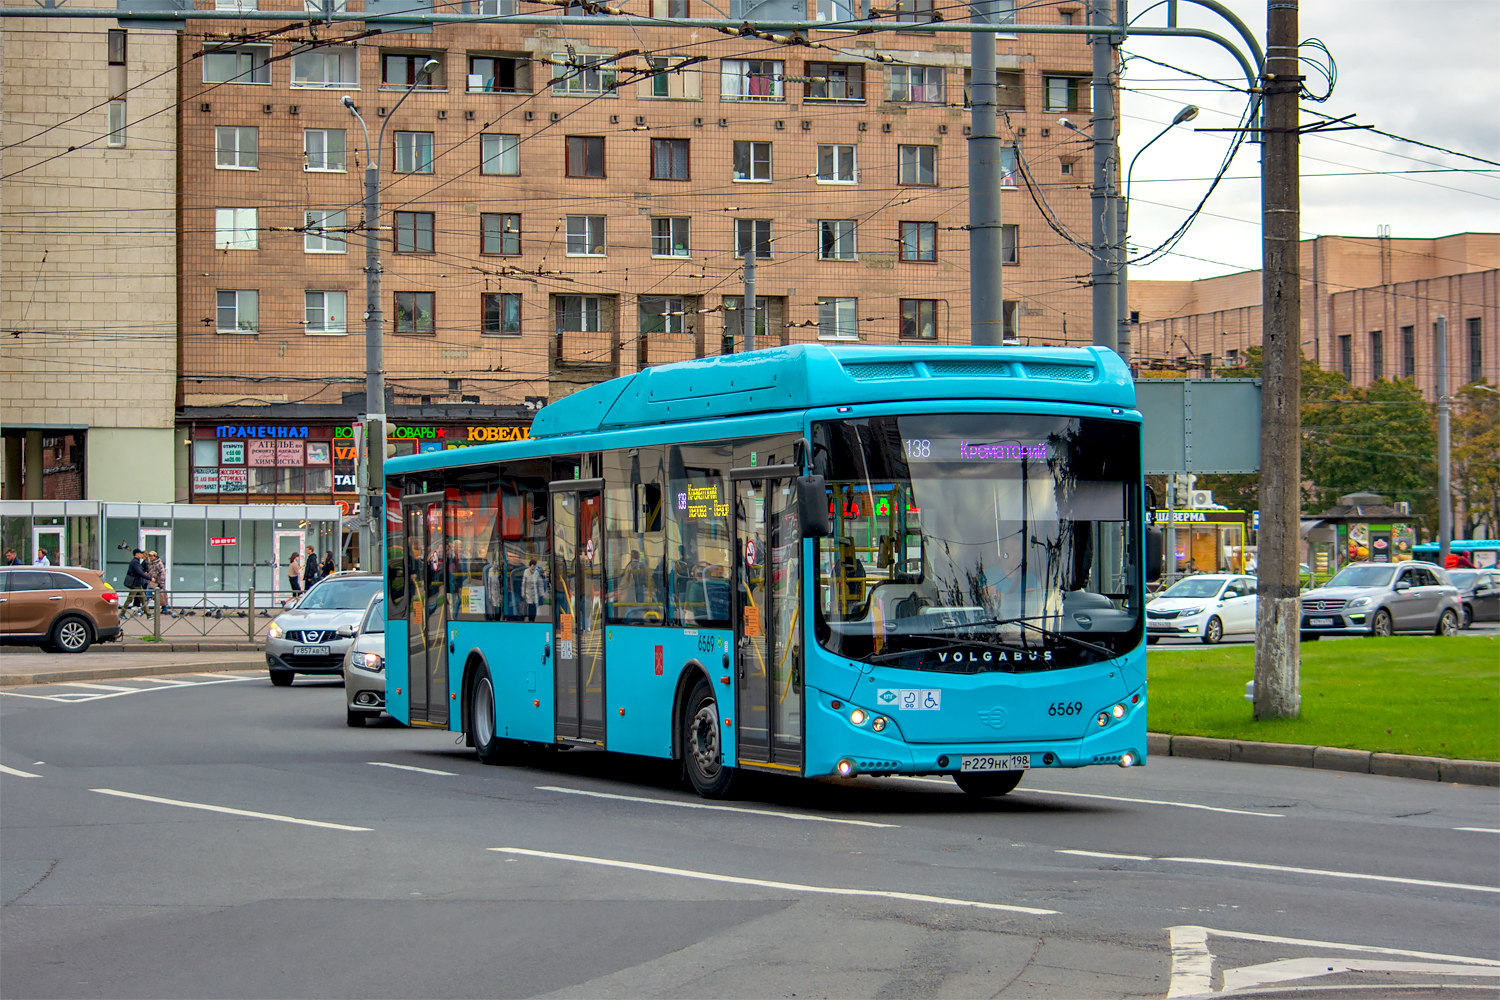 Saint Petersburg, Volgabus-5270.G4 (CNG) № 6569